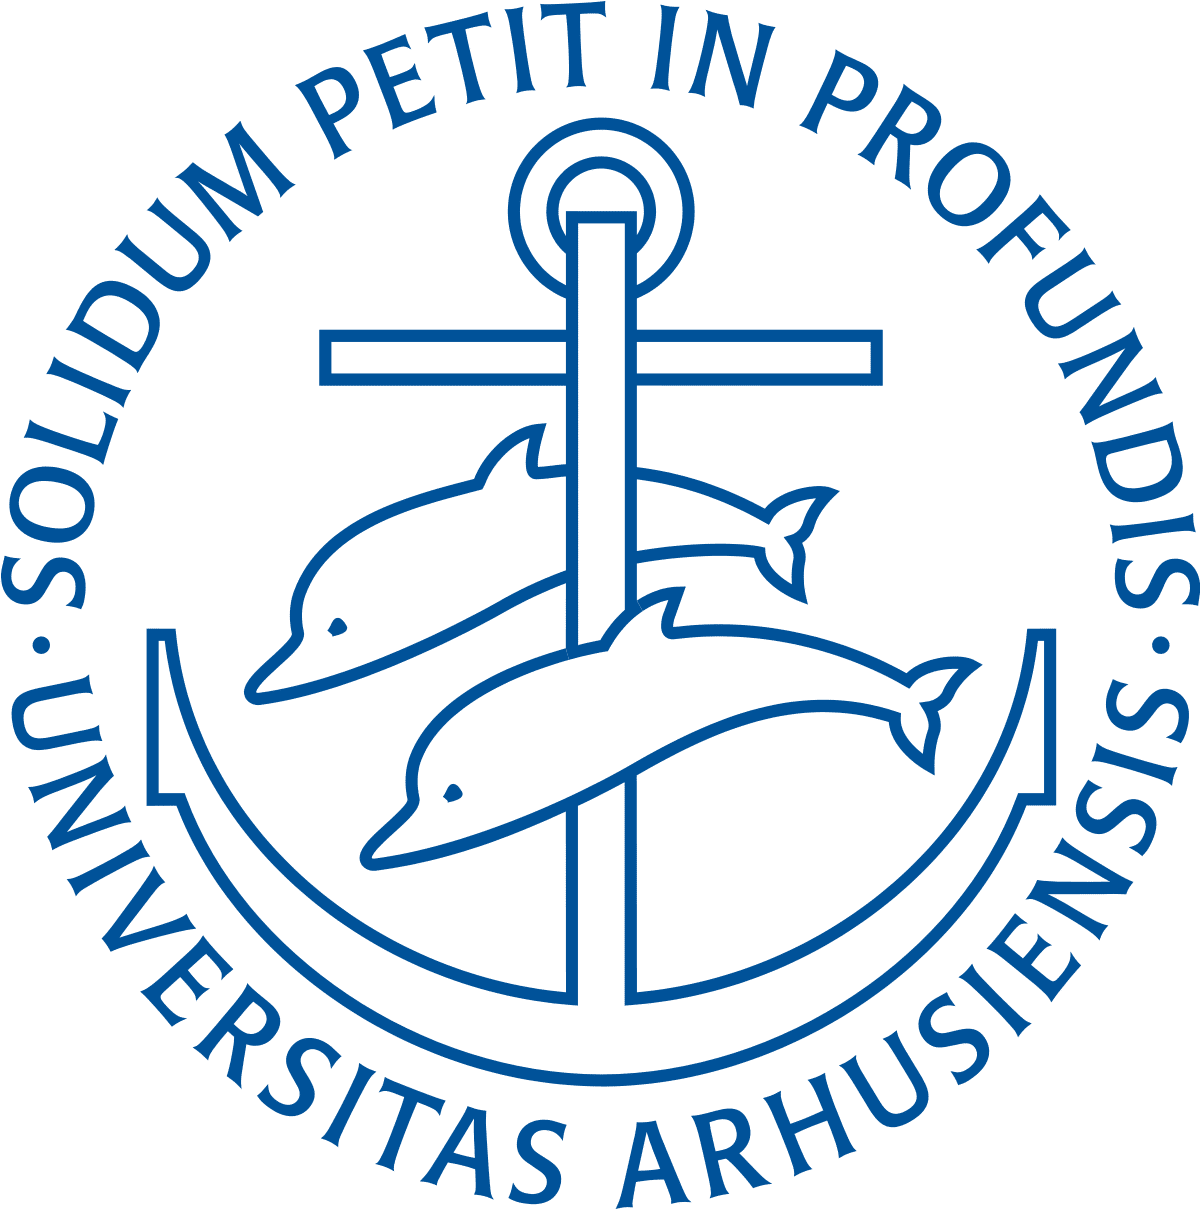 University of Aarhus